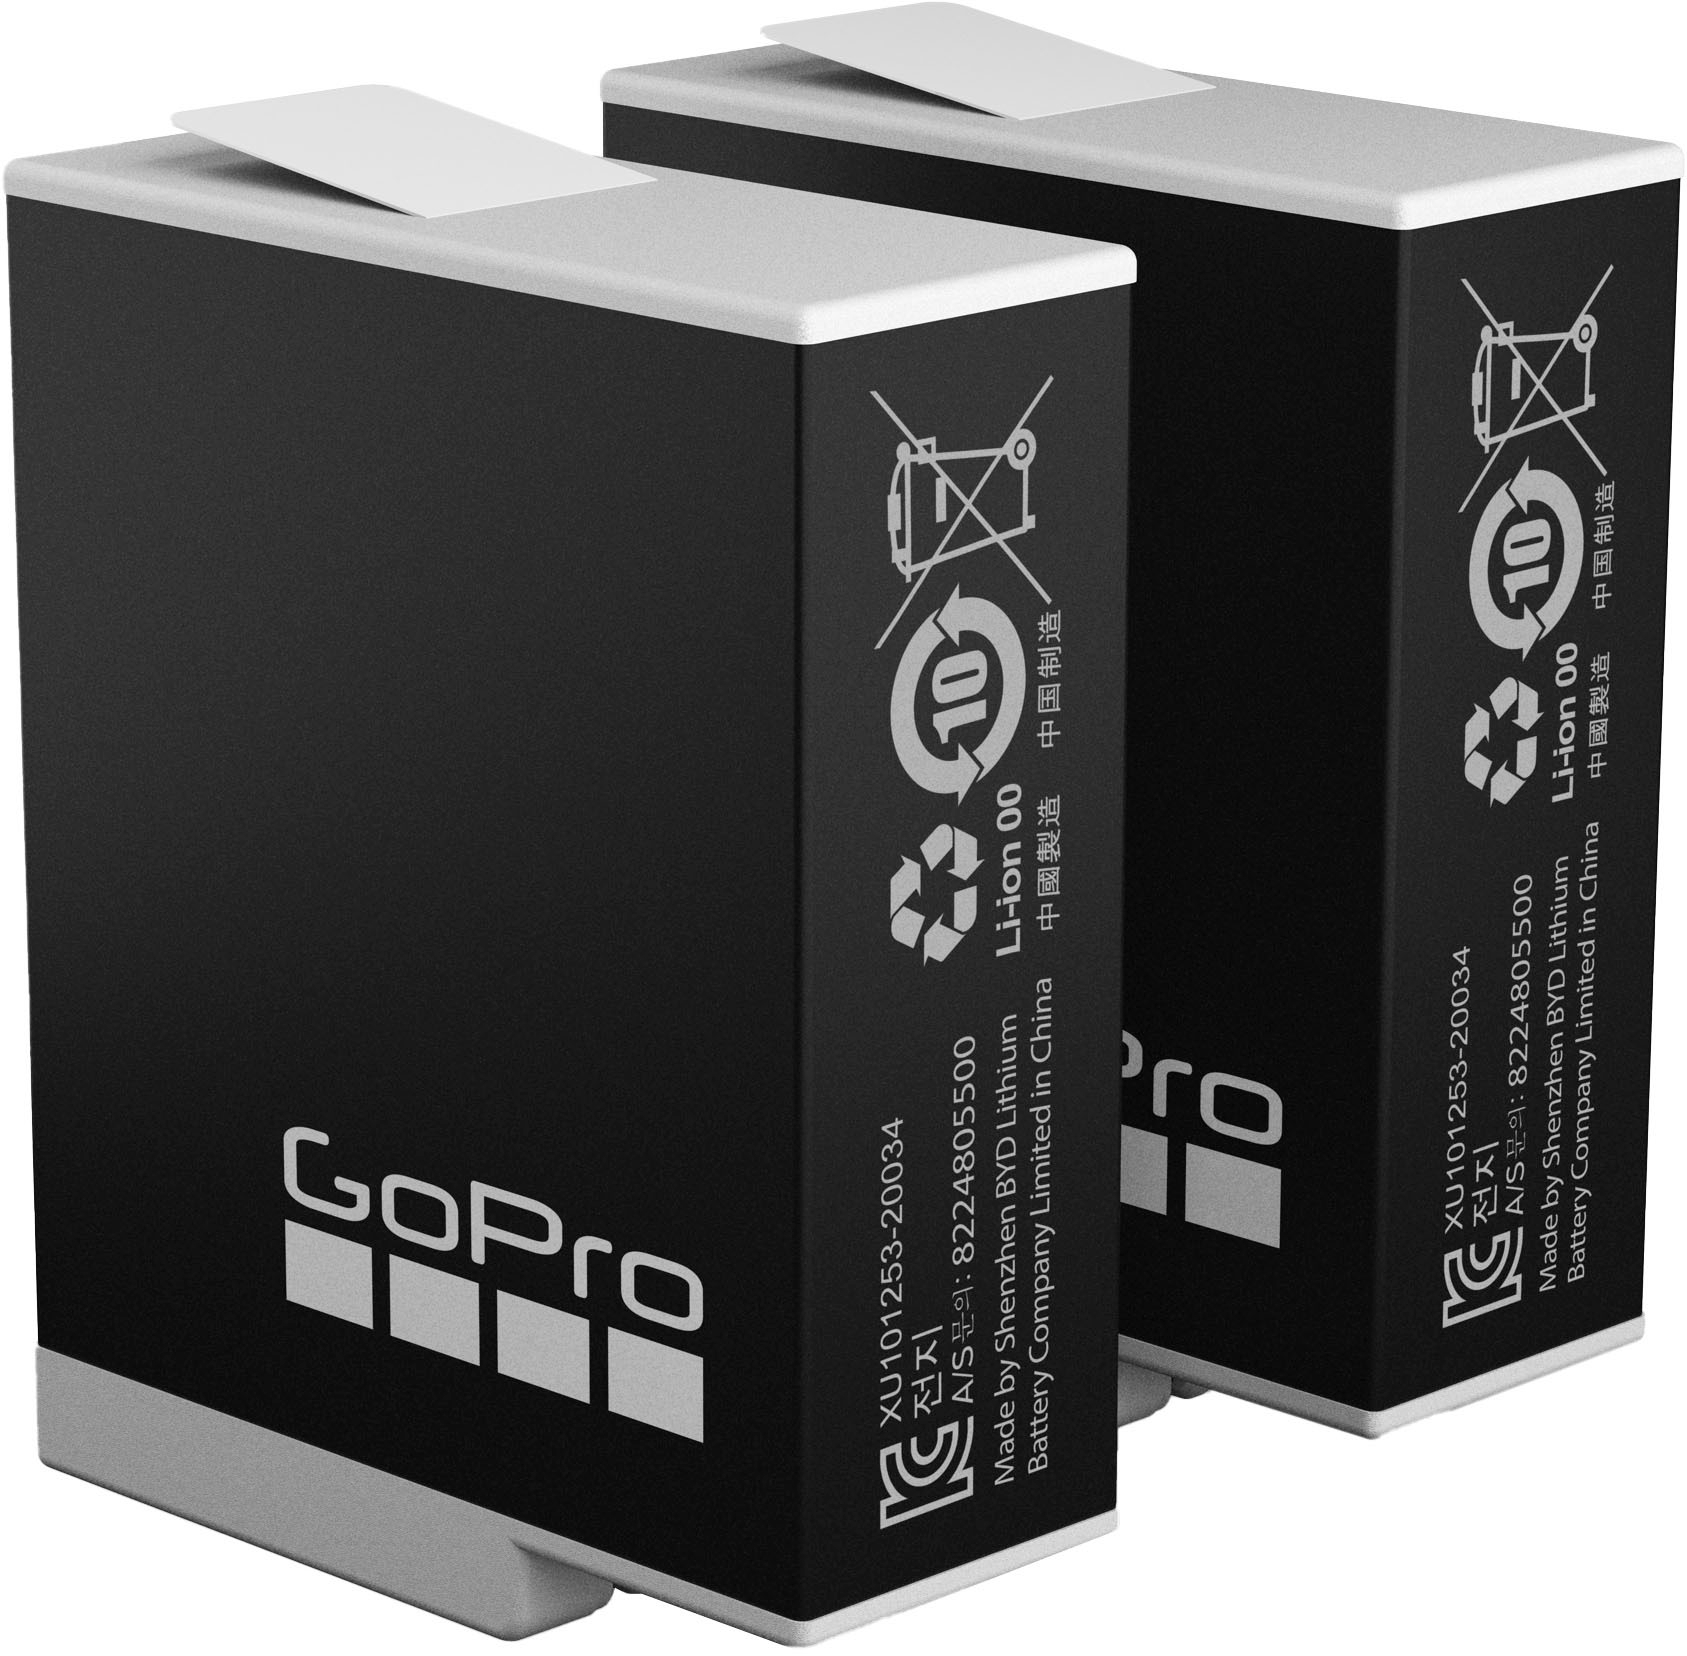  3Pack Hero 11 Batteries for GoPro Hero 12, GoPro Hero 11, GoPro  Hero 10, GoPro Hero 9 Camera, 3-in-1 Battery Charger for GoPro 12 GoPro 11  GoPro 10 GoPro 9 Black Camera ADDBD-001 : Electronics